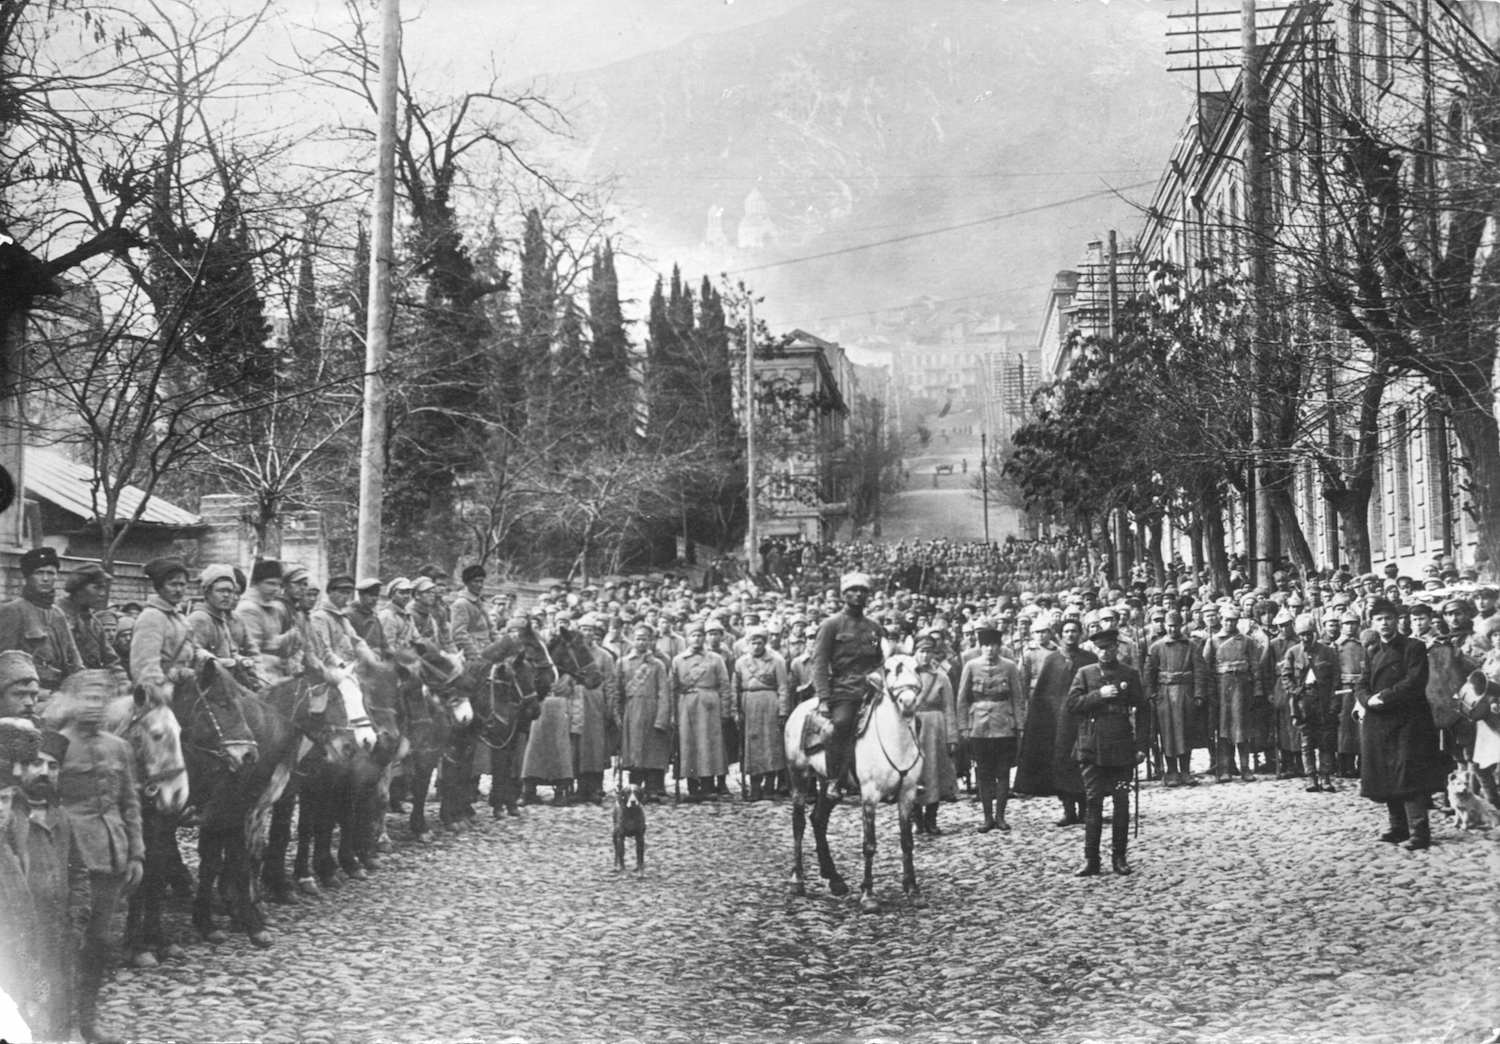 The Red Army enters Tbilisi (Tiflis) on 25 February 1921. Image: Georgia's National Archives via Wikimedia